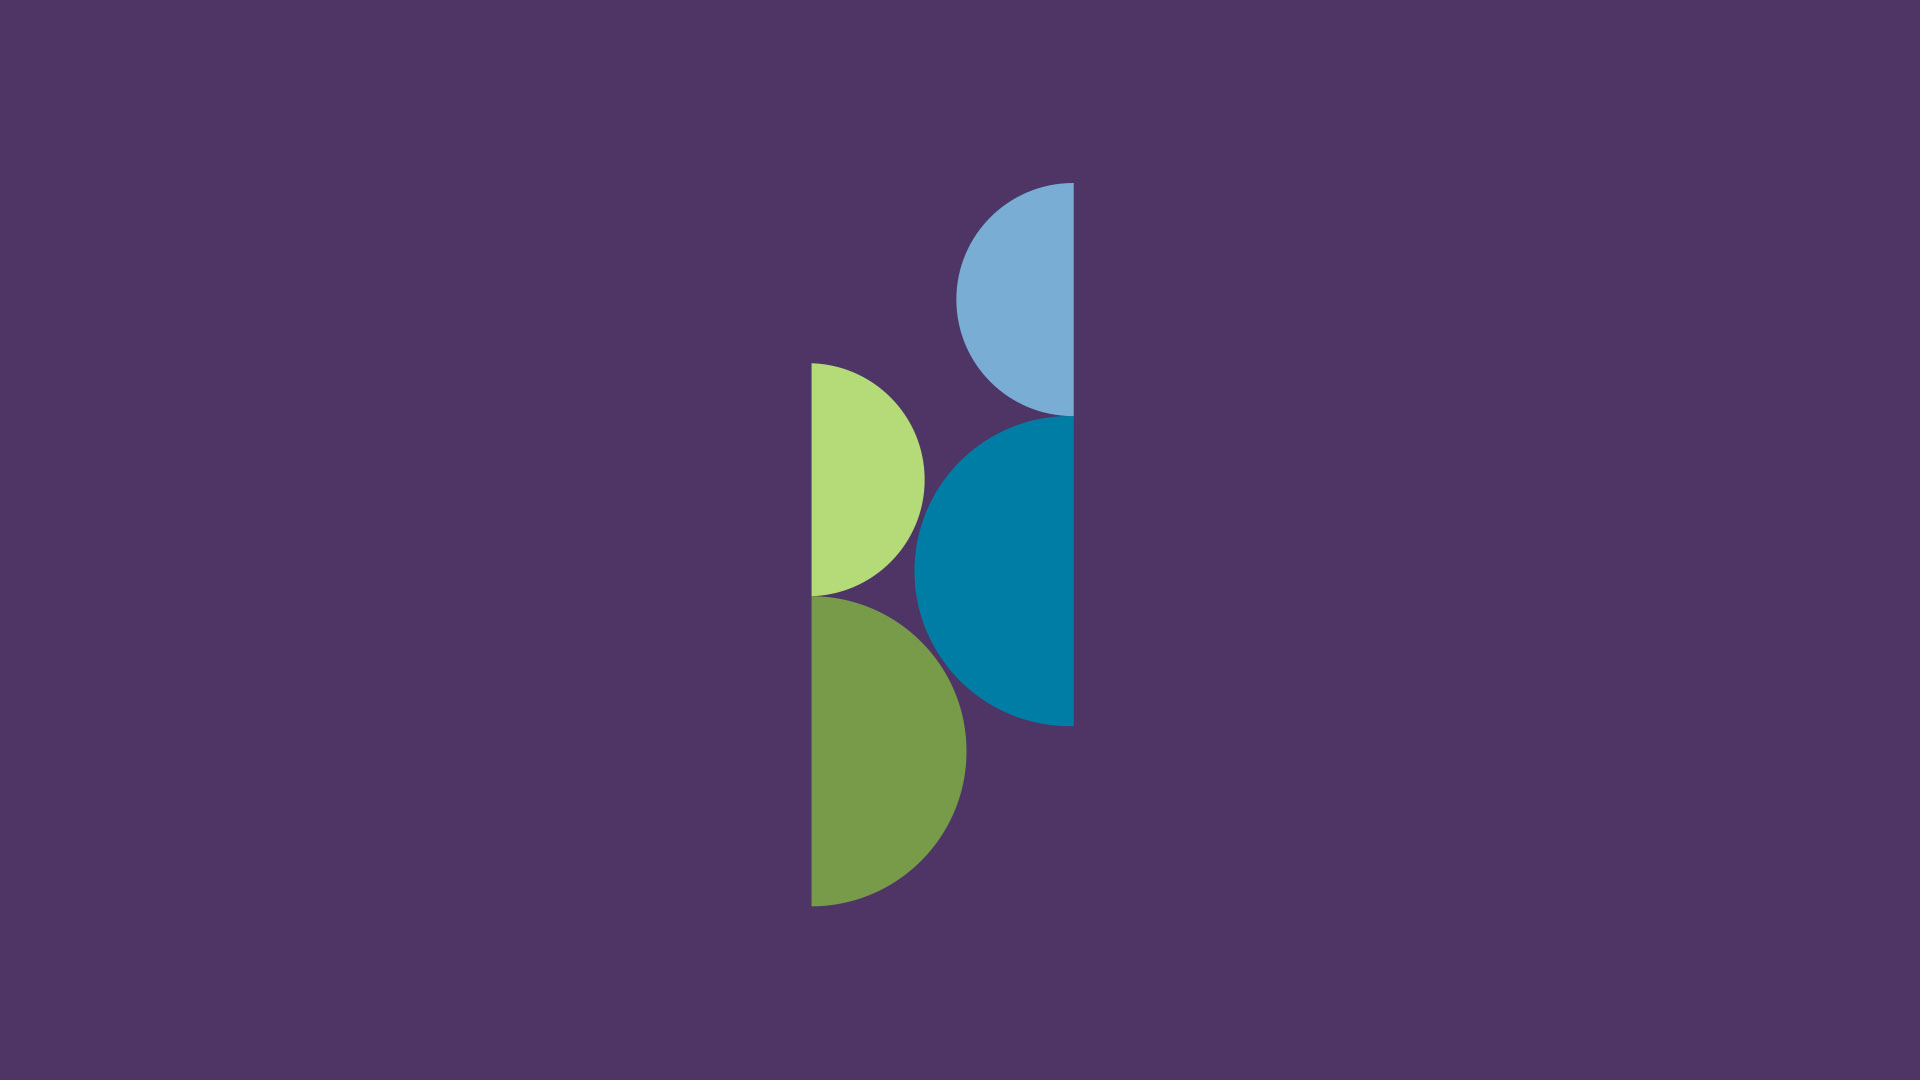 back bay business improvement district mark on purple